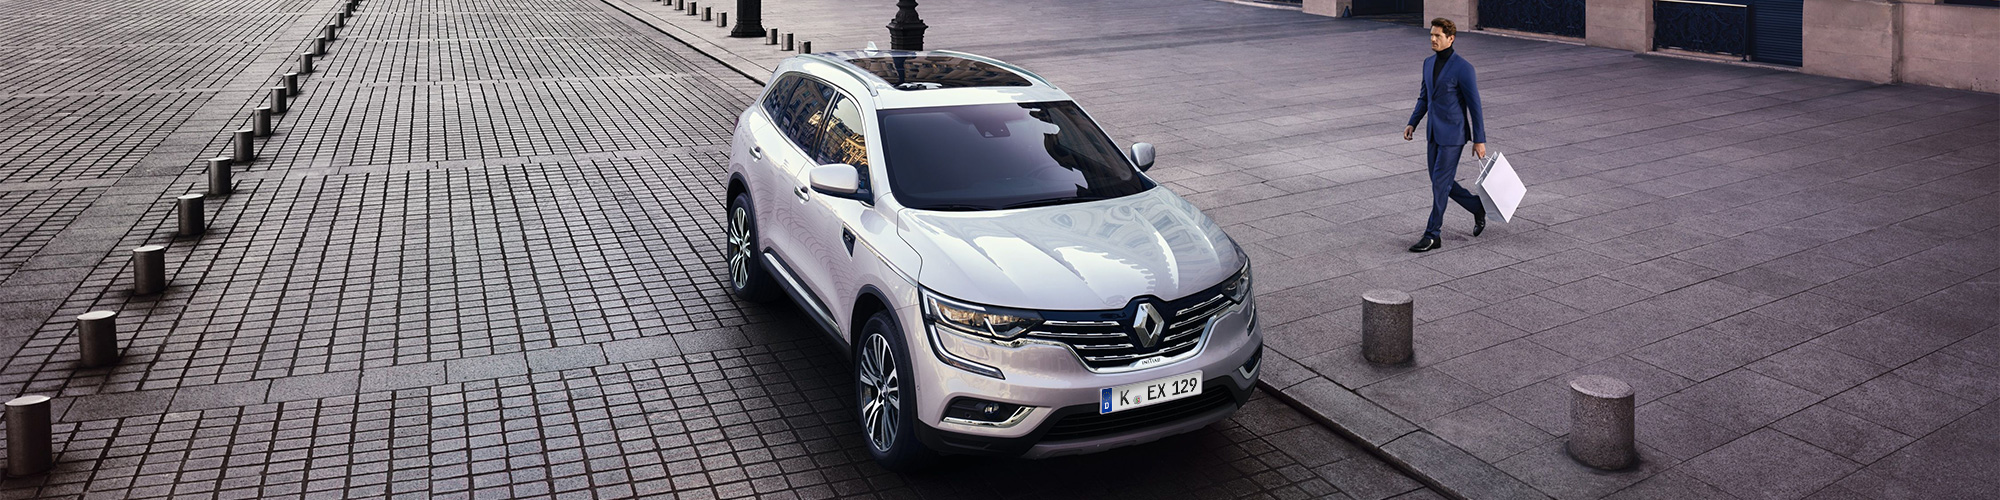 Neuer Renault KOLEOS in Genf